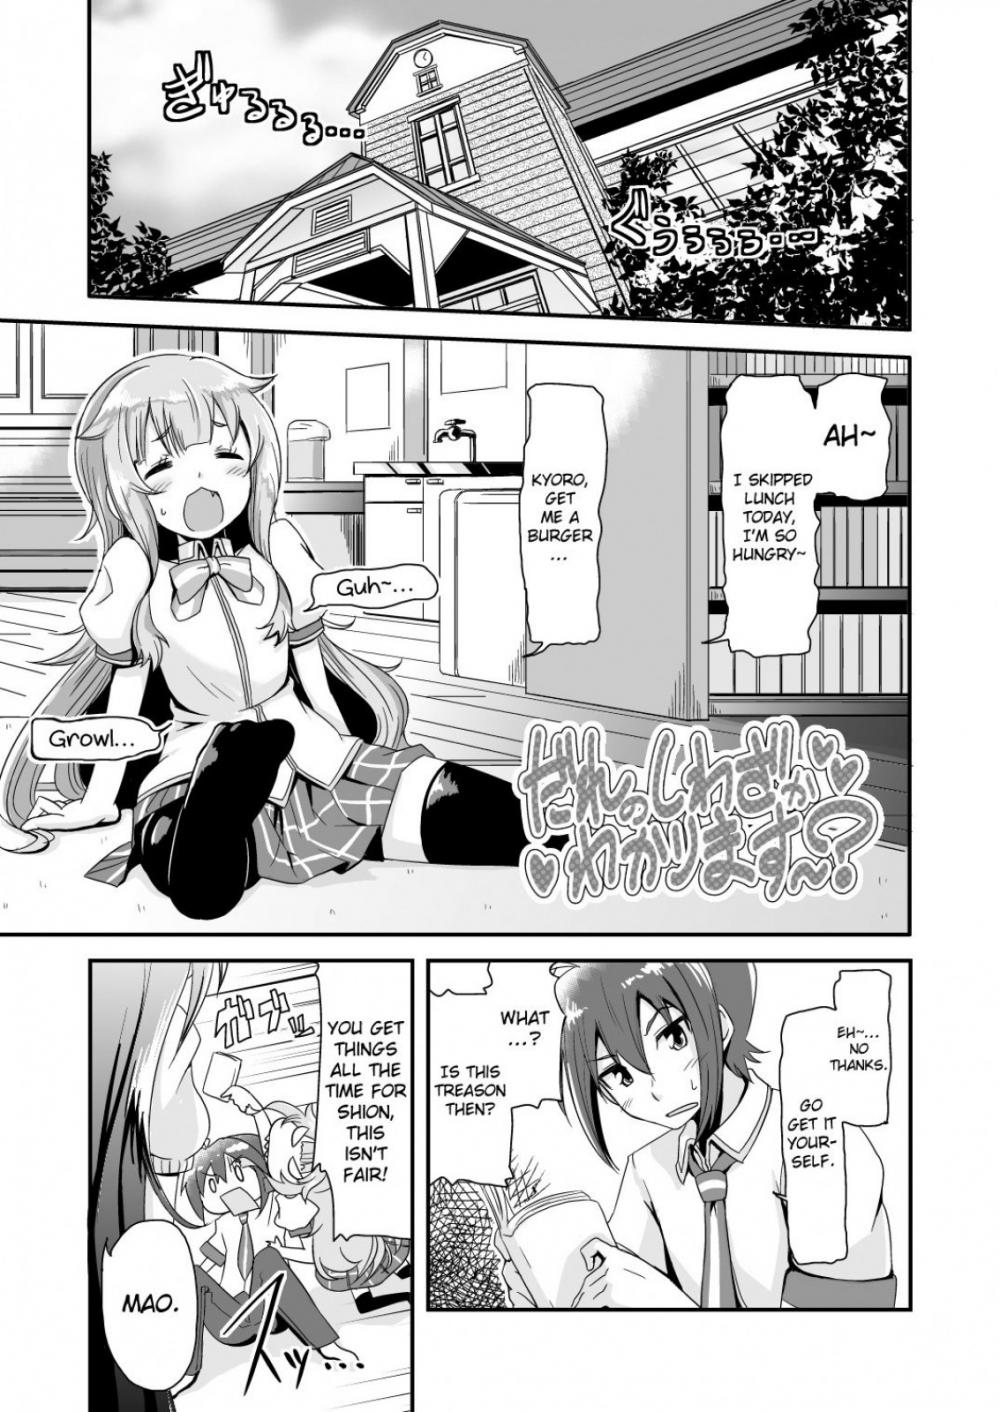 Hentai Manga Comic-Do You Know Who Did This?-Read-2